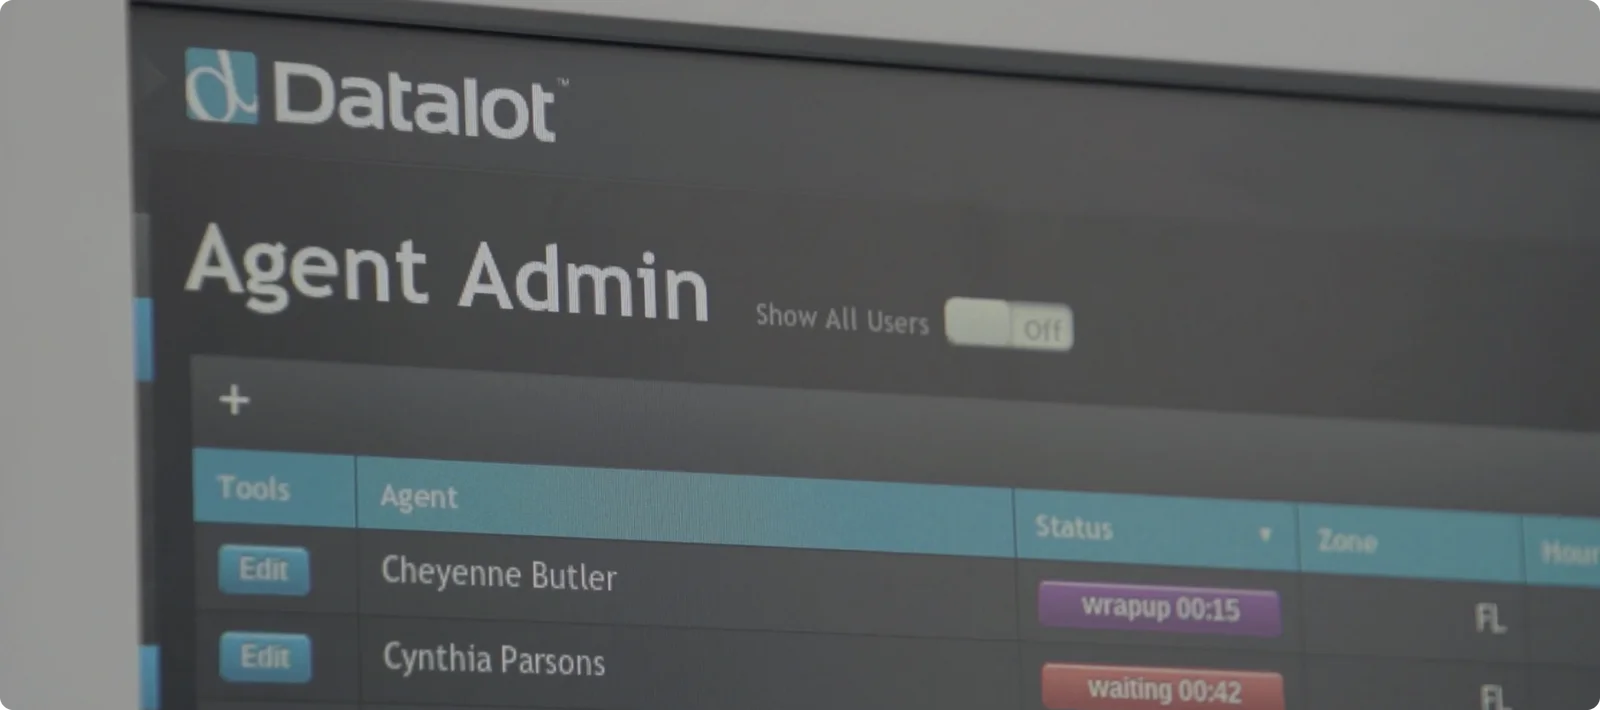 datalot user system administration video place holder